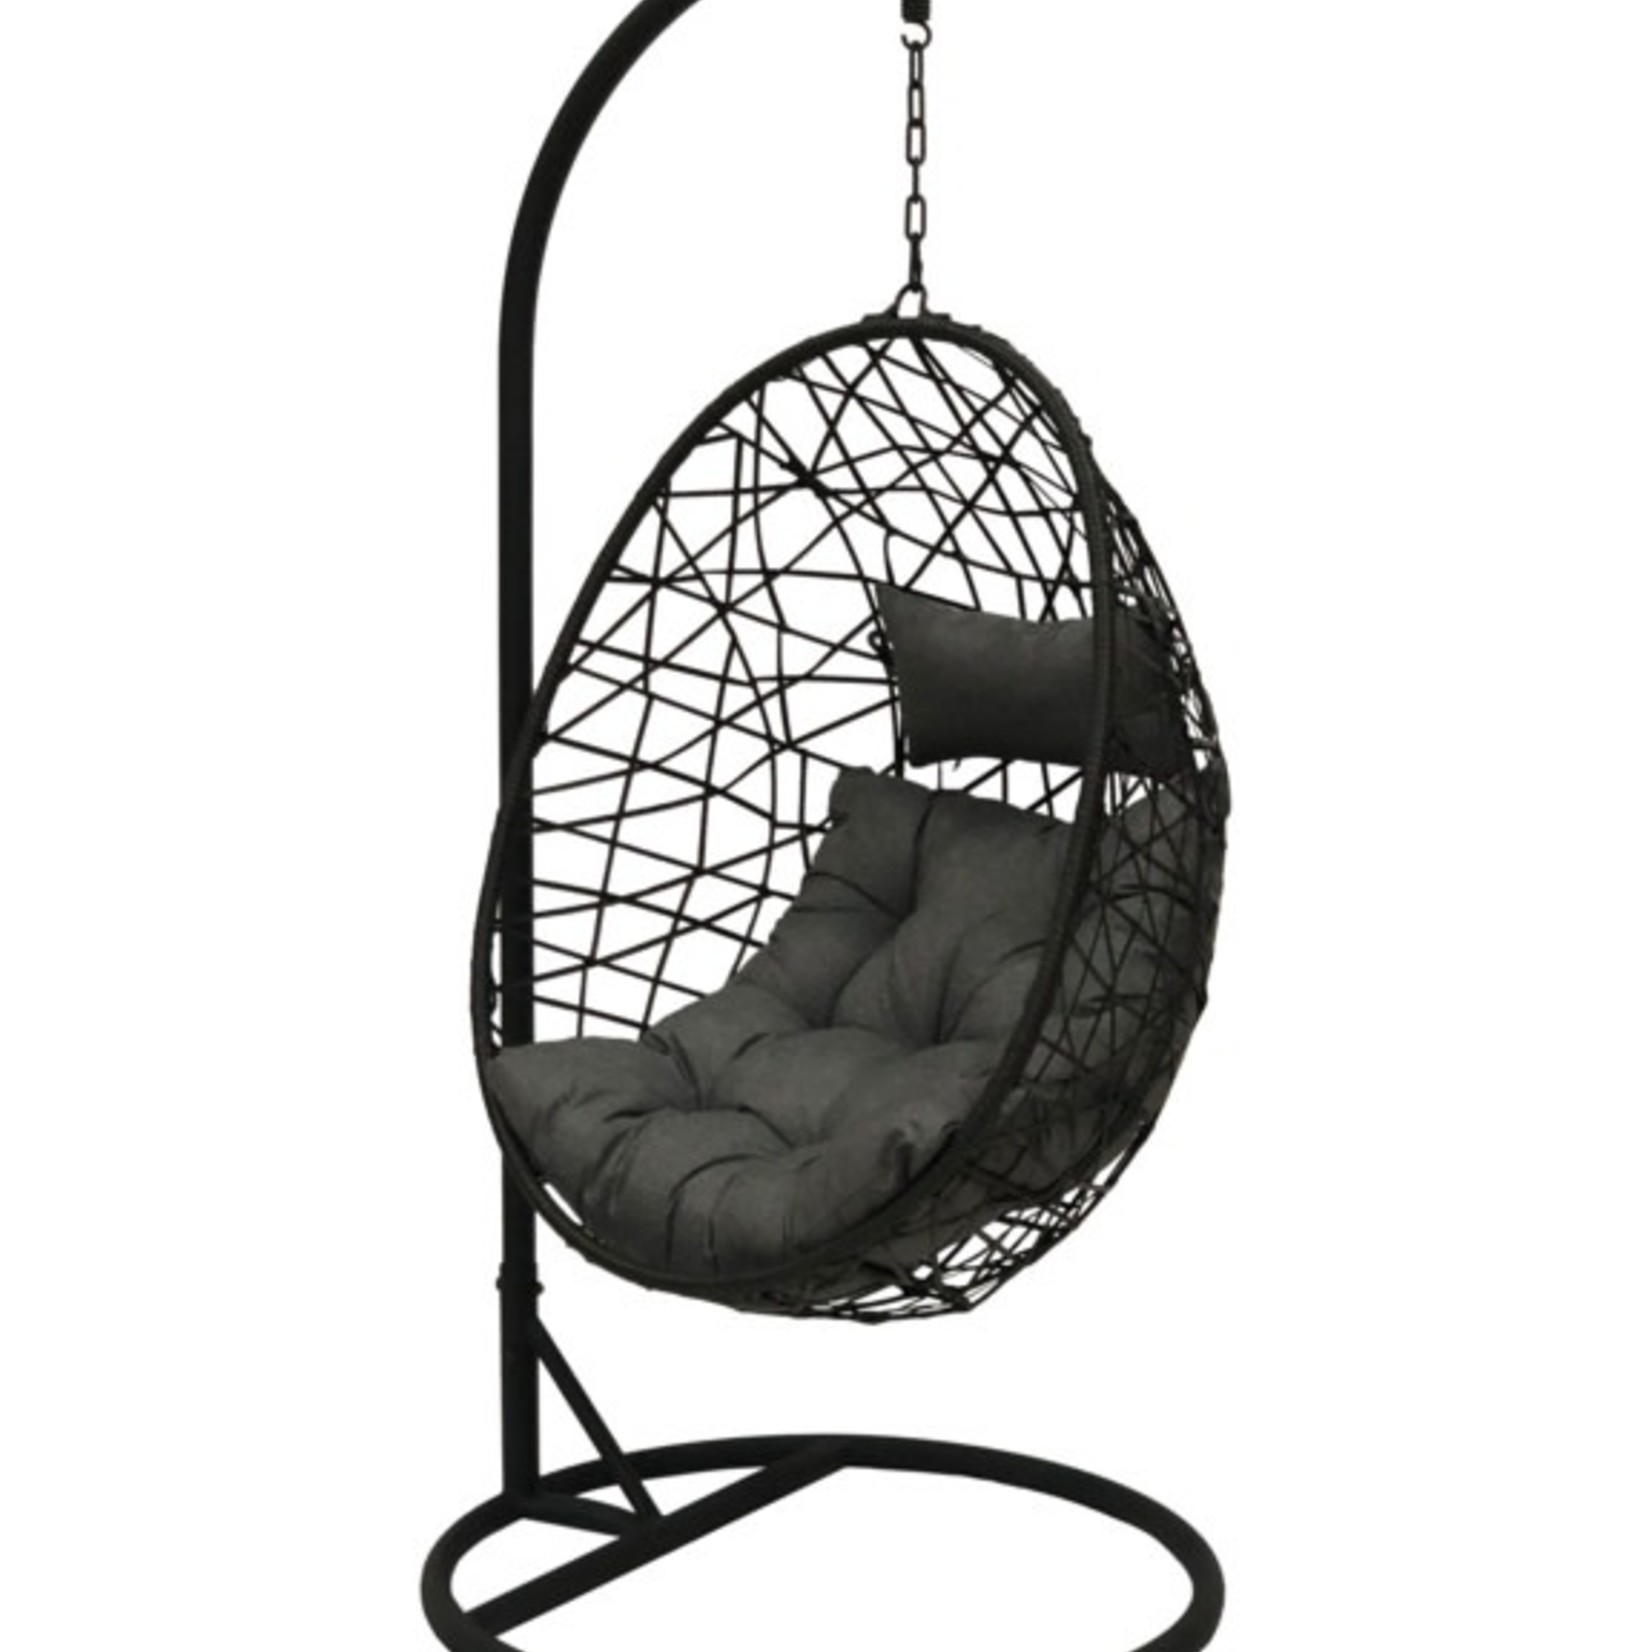 SupaGarden Black Rattan Hanging Egg Chair